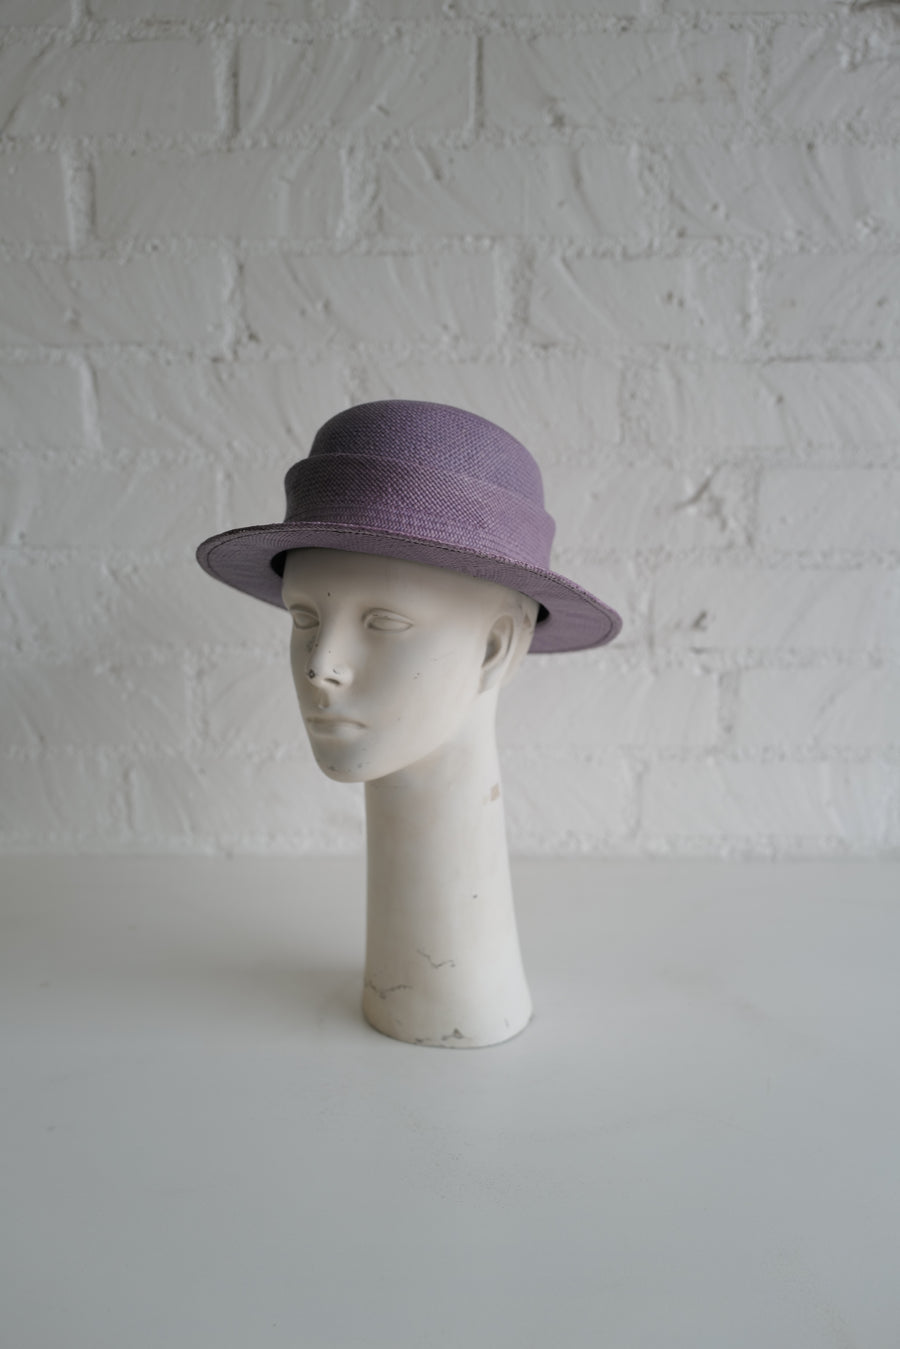 Denim Small hat WAREHOUSE SALE - Gladys Tamez Millinery